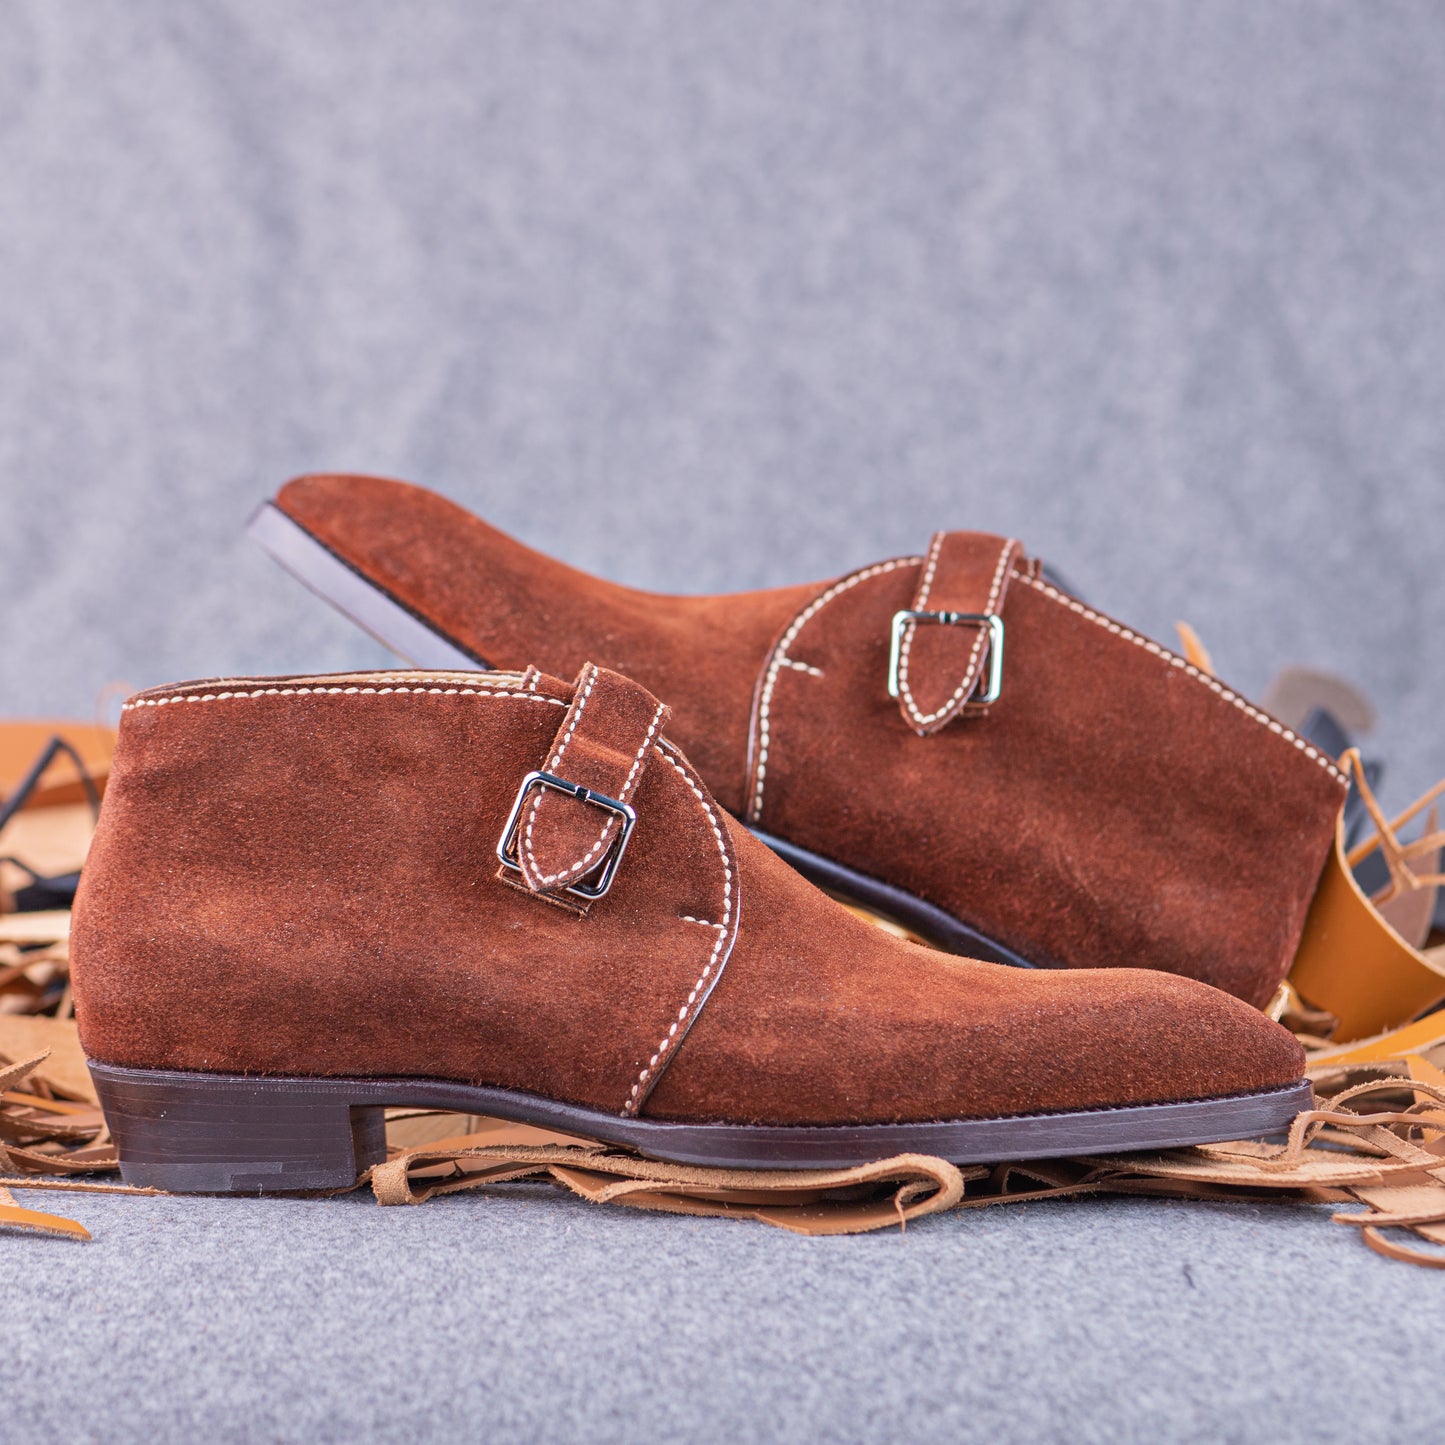 Gilman - Chukka boots with arrow strap, fully handsewn